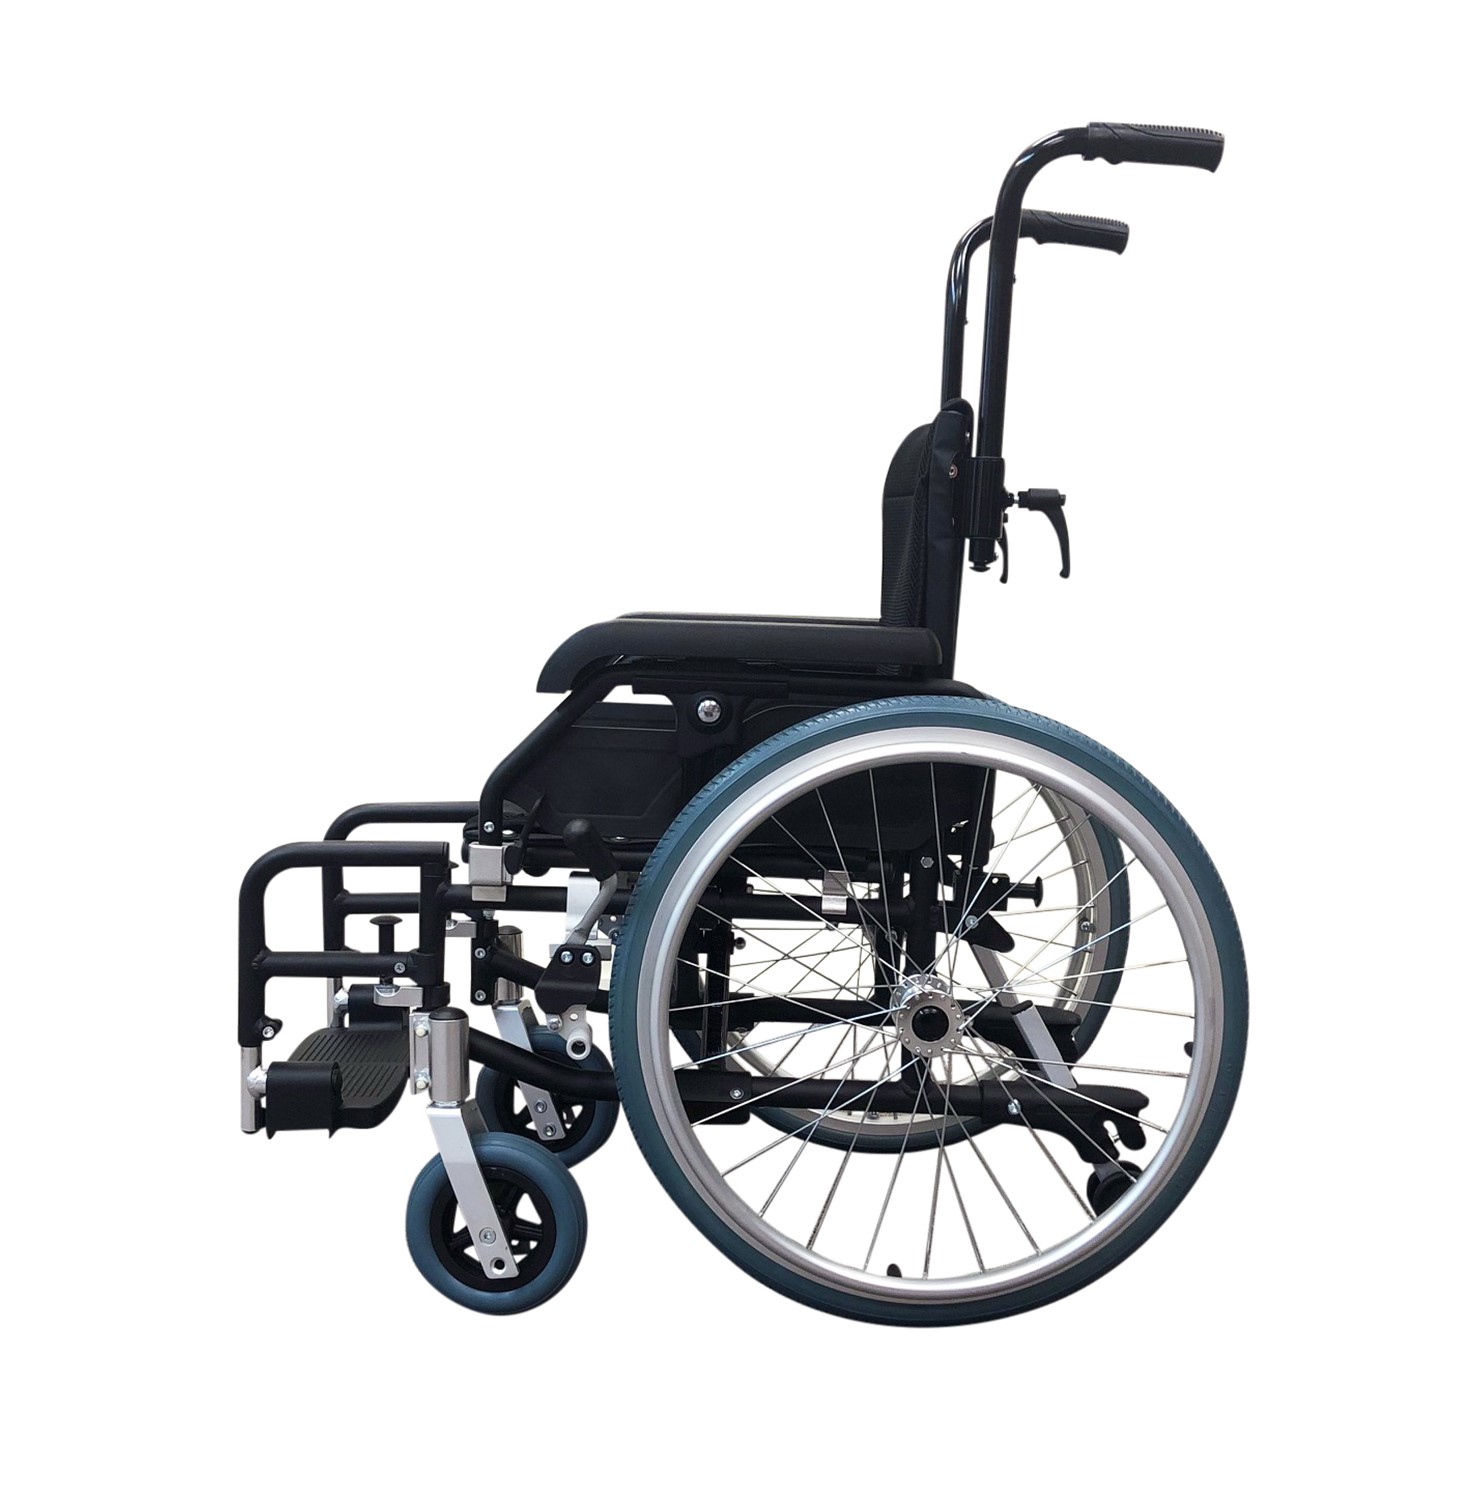 Support Posture Padded Seat Belt Lap Pelvic Wheelchair Adjustable Black  Small